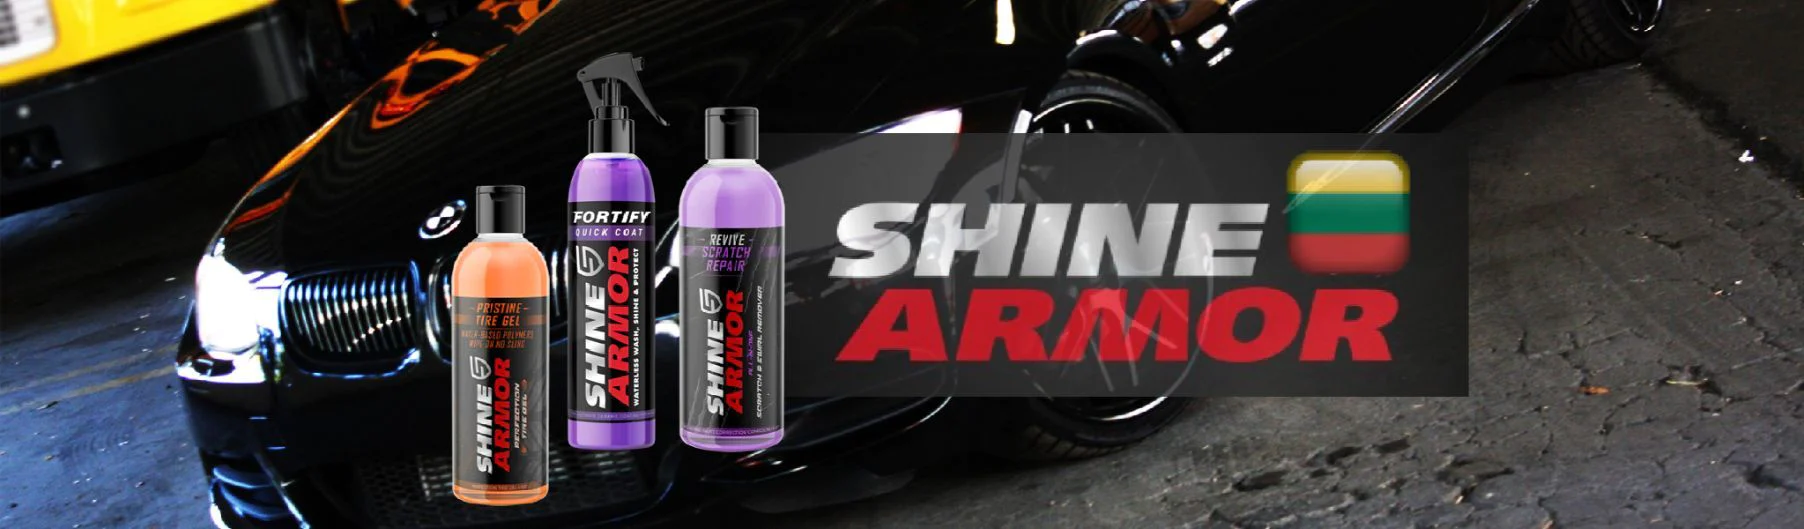 Shine Armor  Car care products - AurelijosSPA